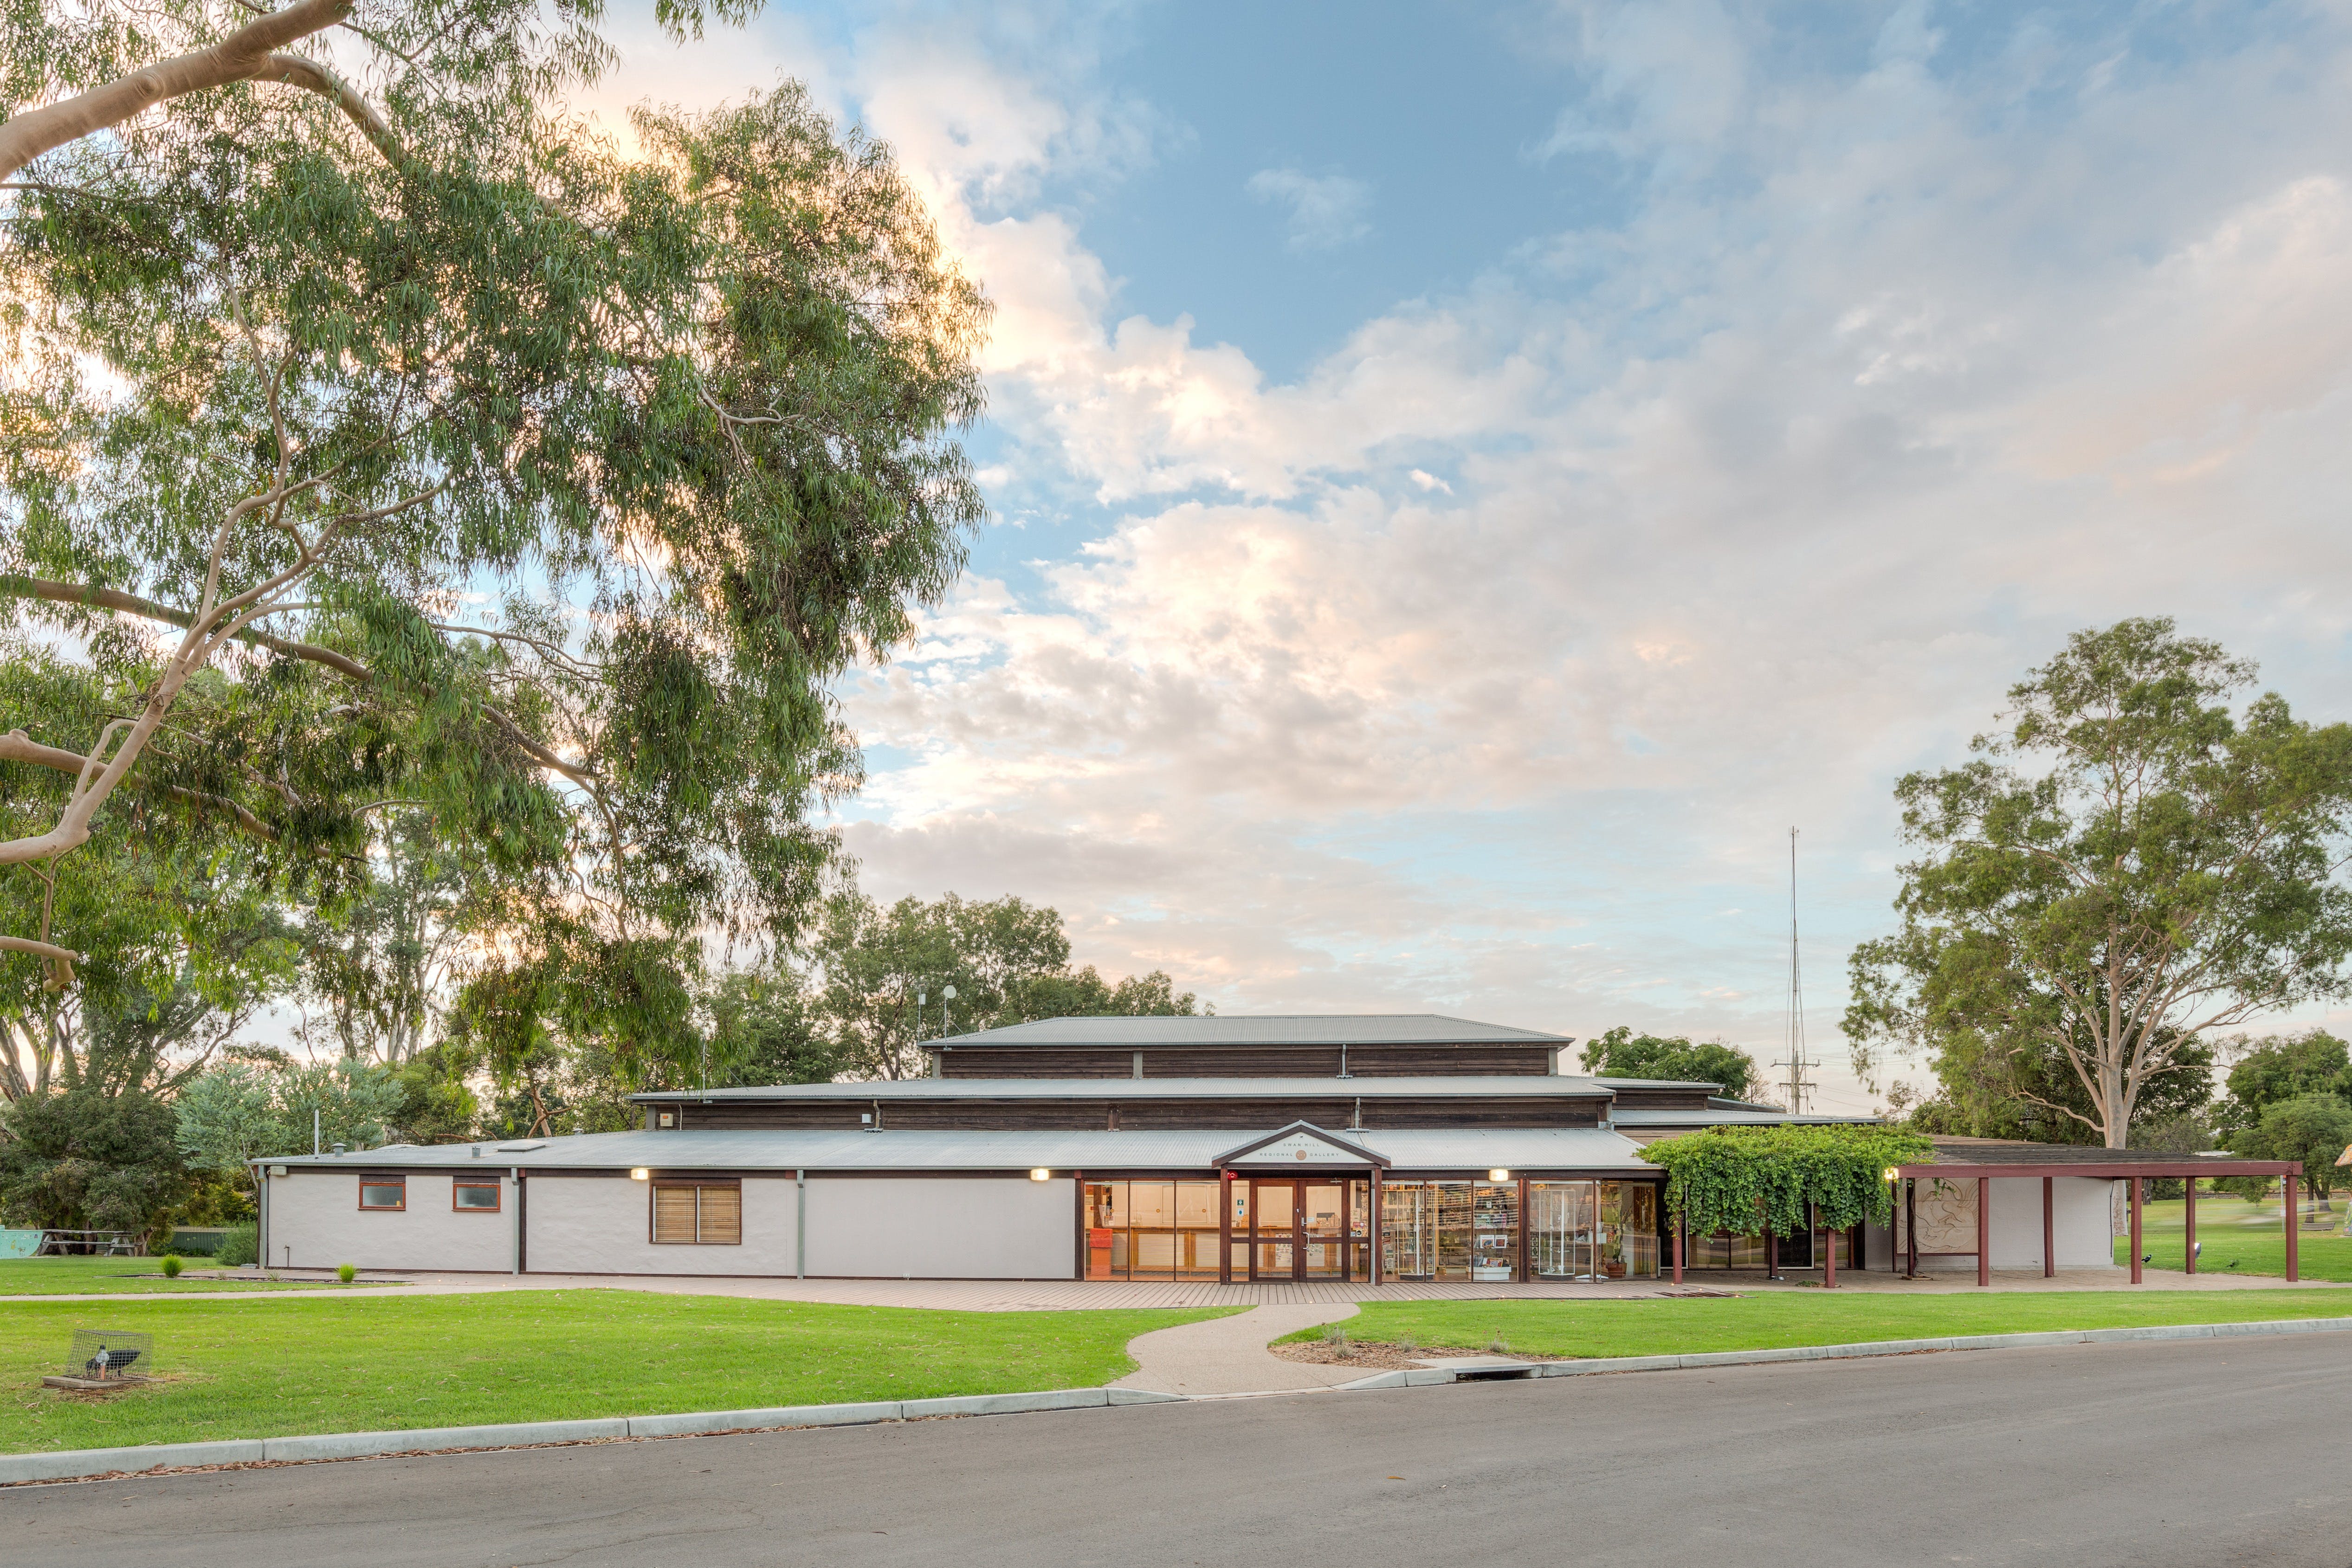 Swan Hill Regional Art Gallery - Geraldton Accommodation